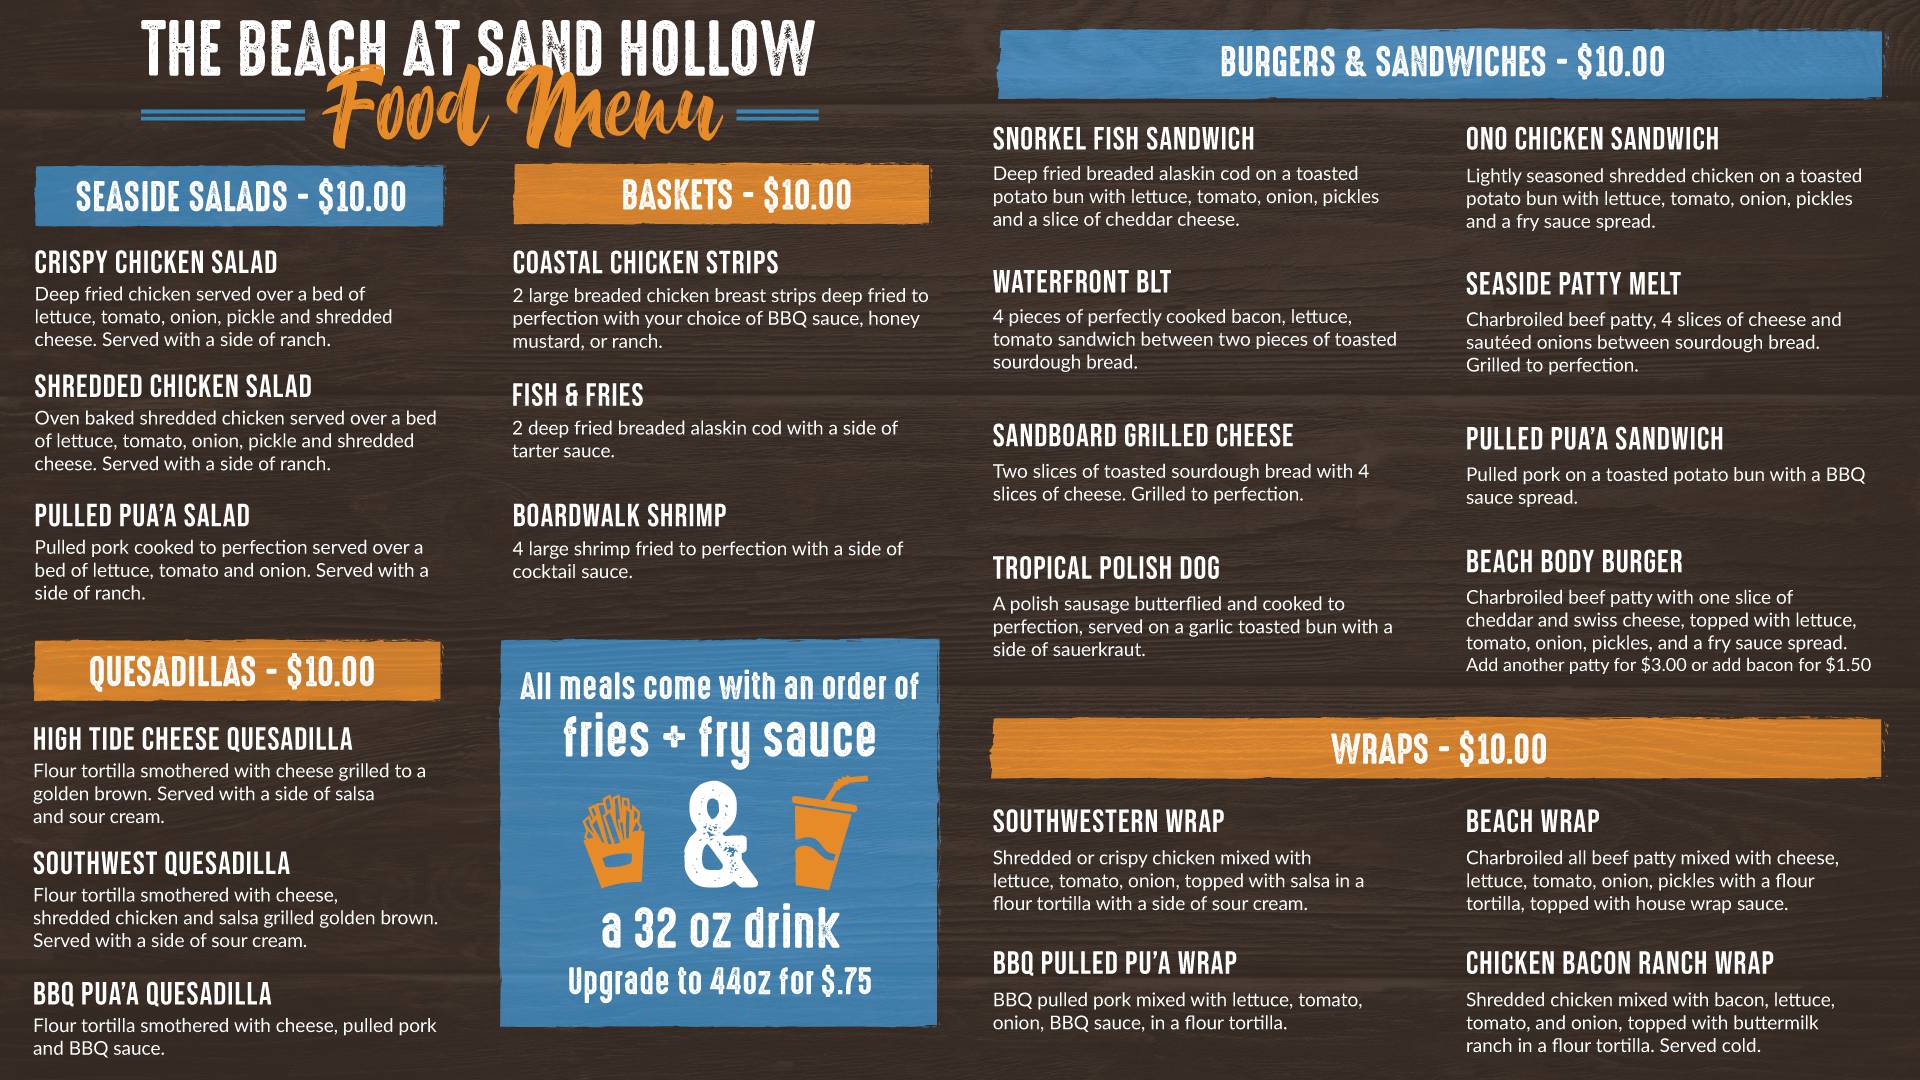 BASH Powersports - Sand Hollow Dining Food Menu Page 2